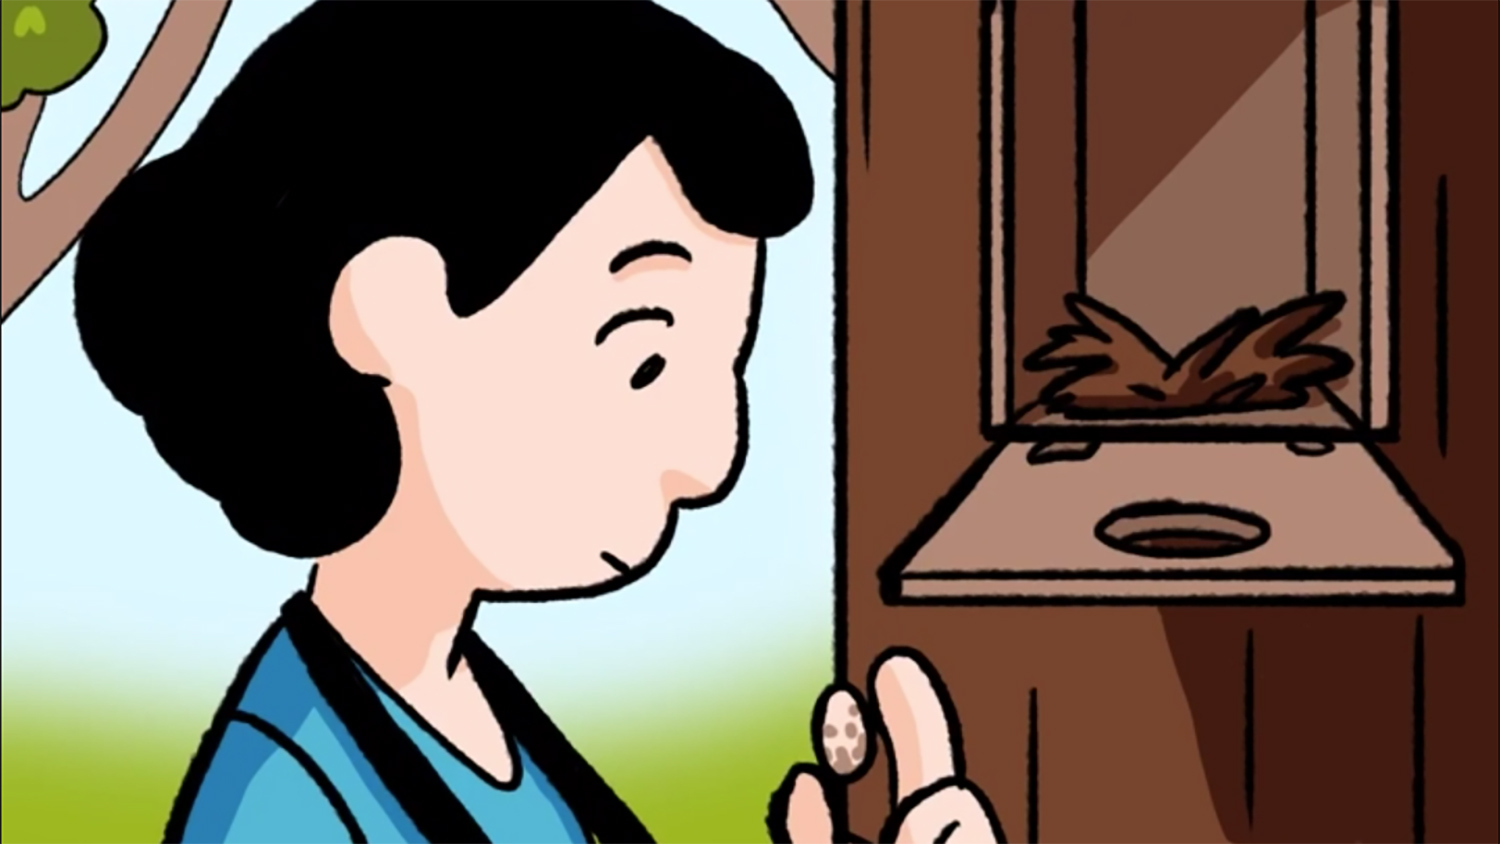 Animated woman looks at house sparrow eggs